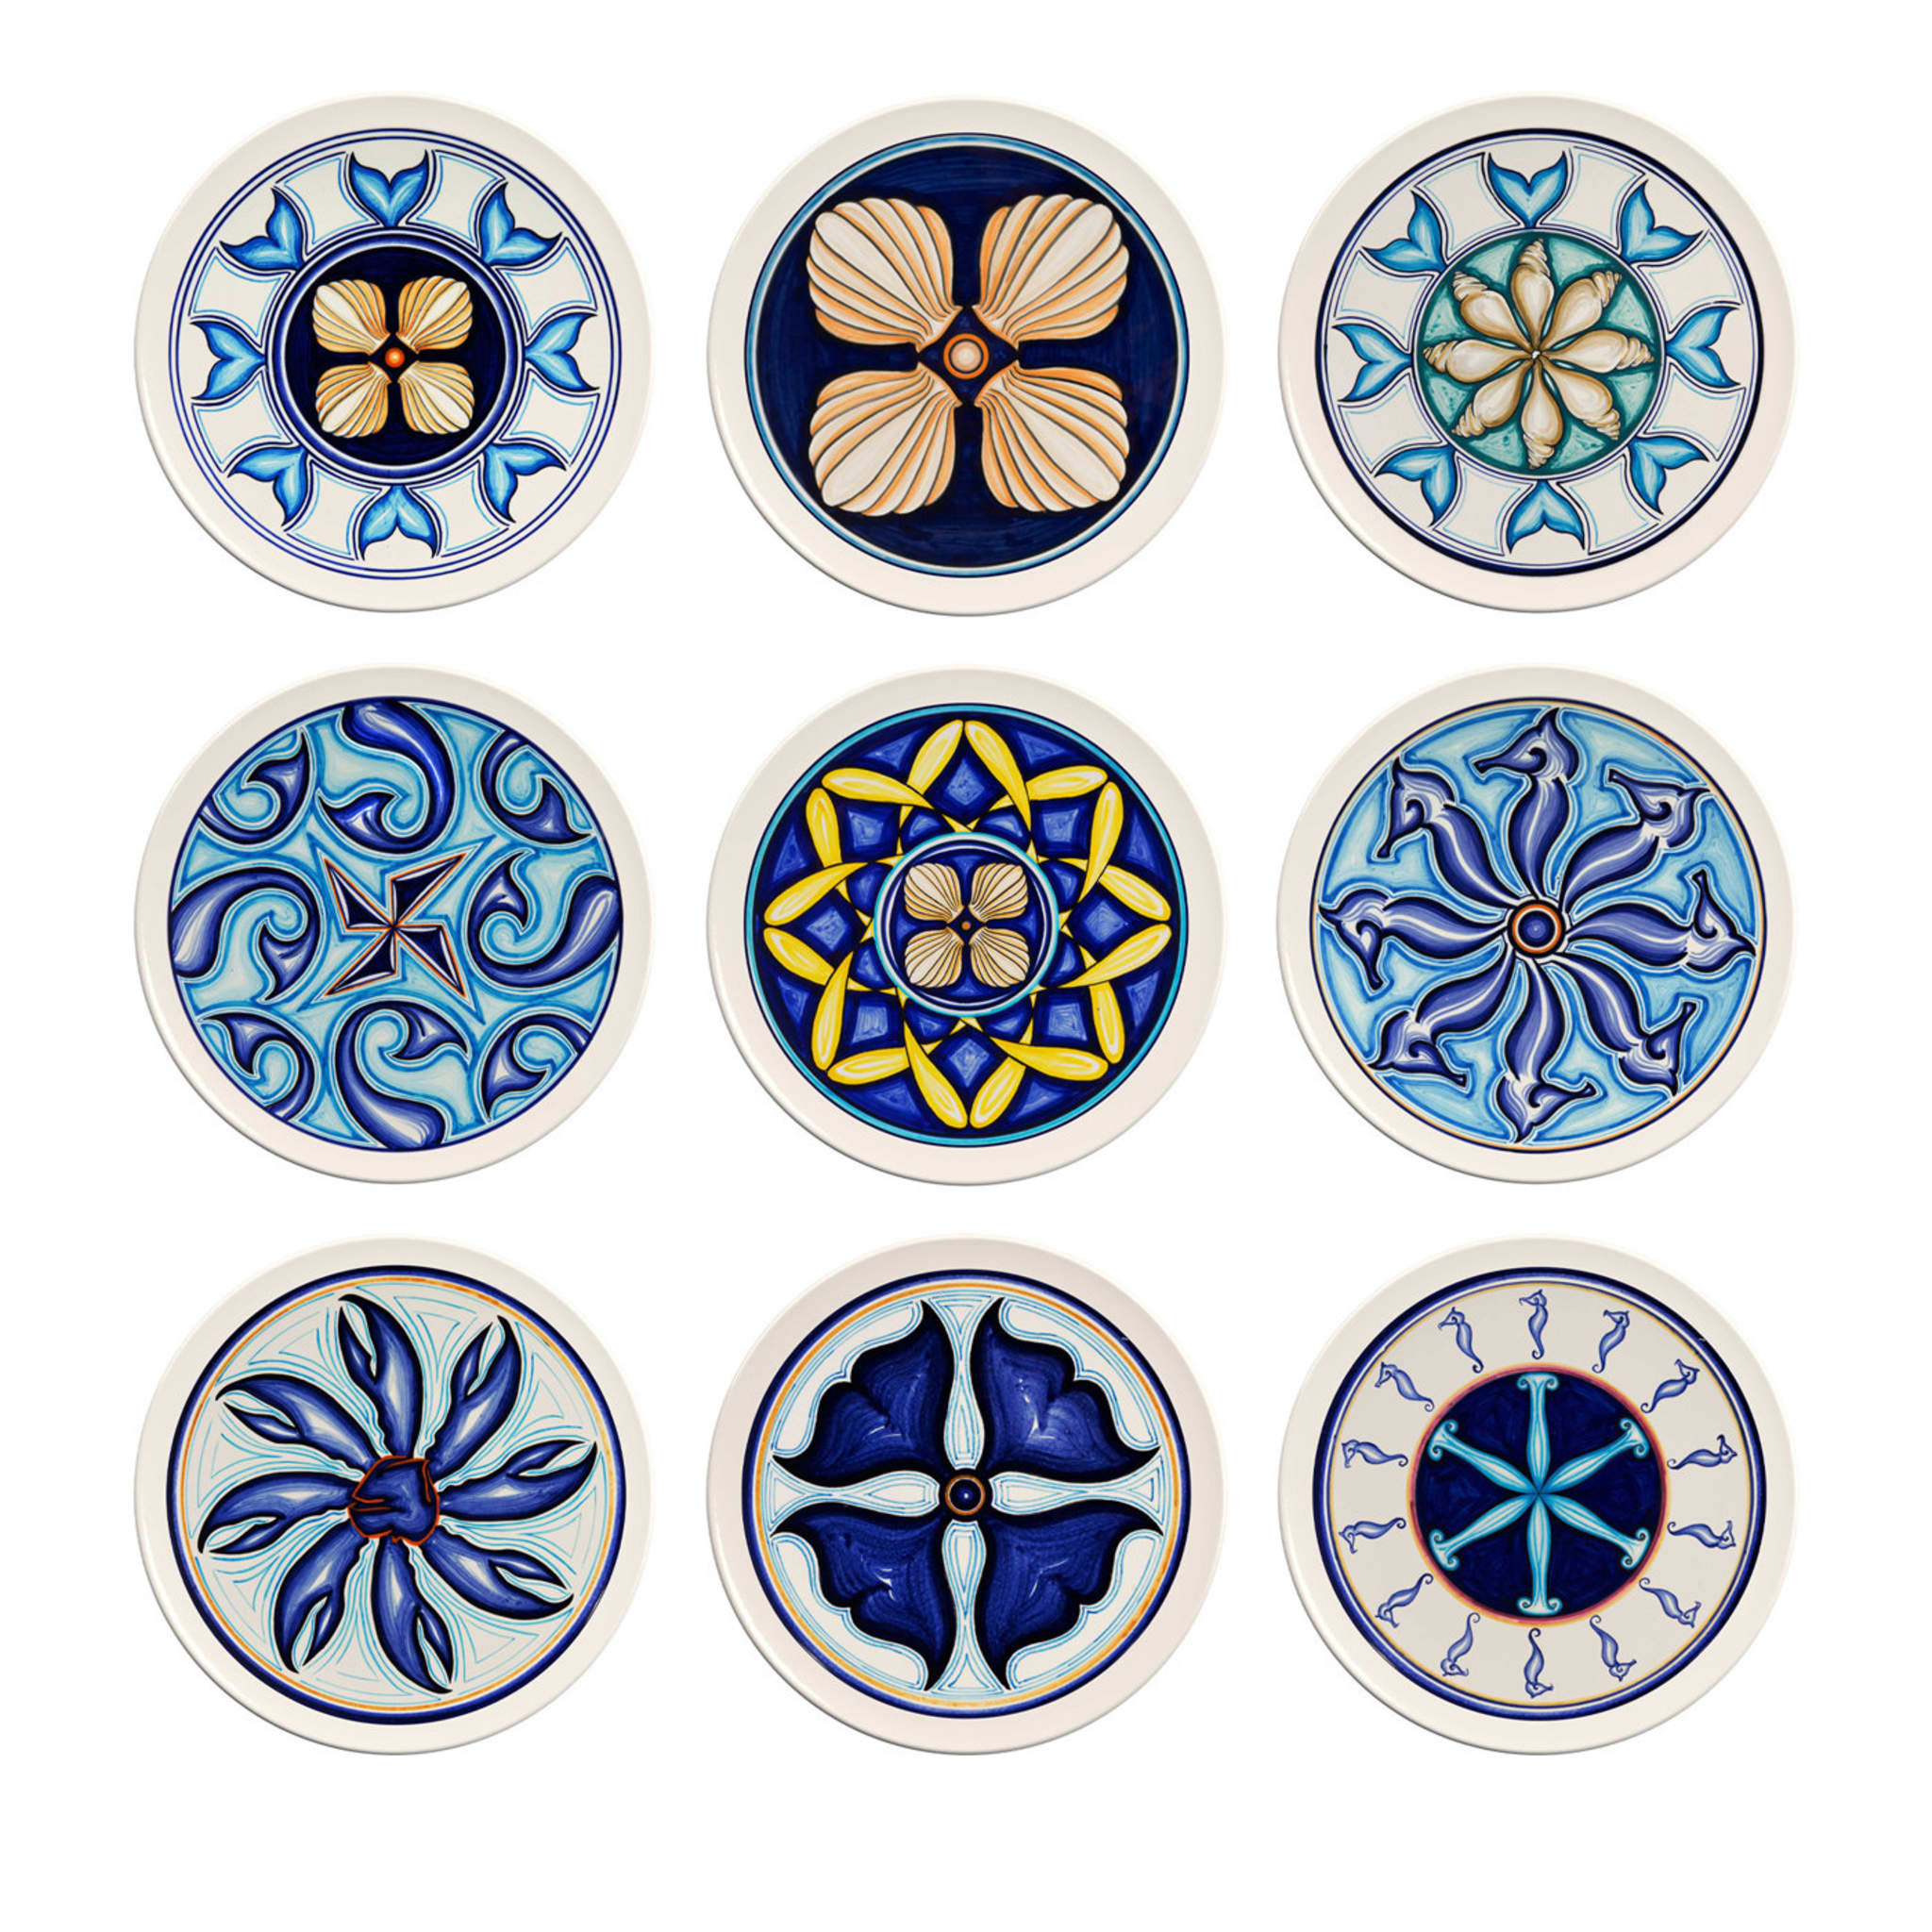 Colapesce Set of 9 Decorative Plates #3 - Main view